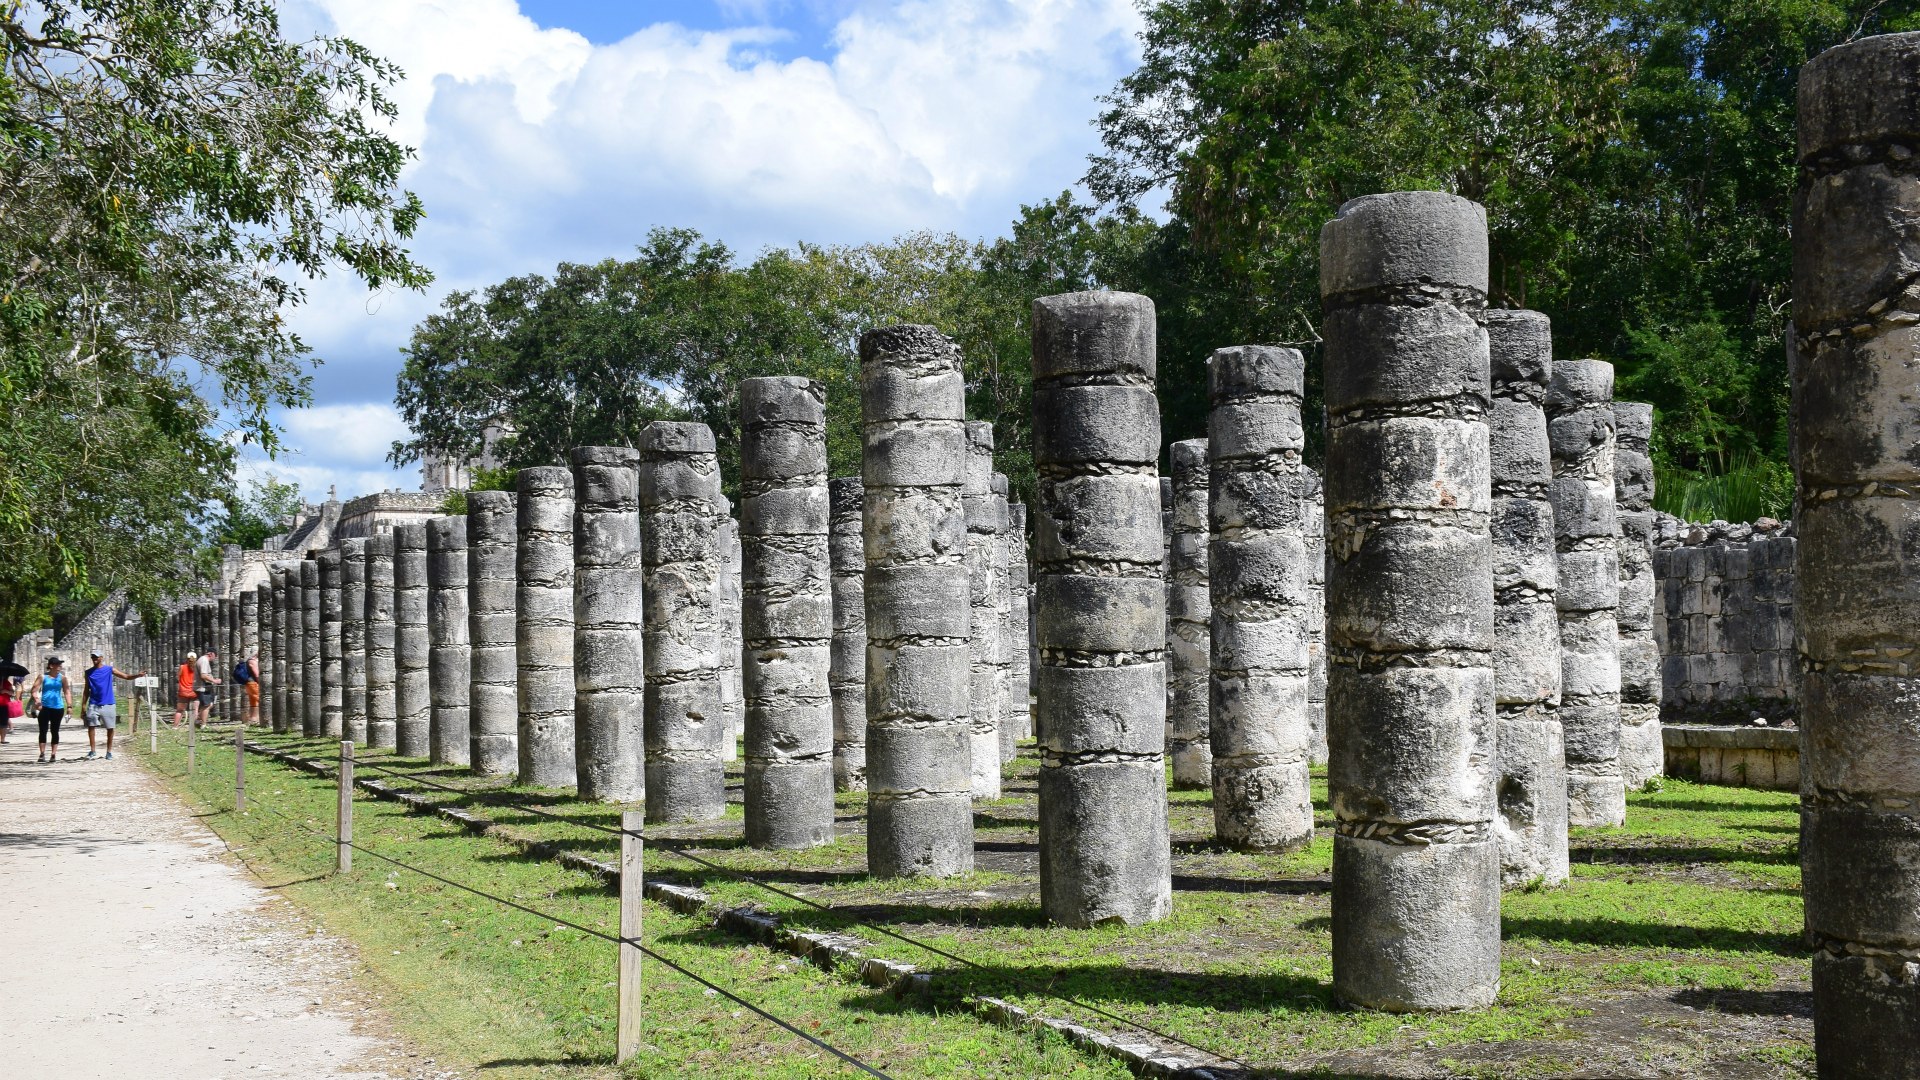 Group of 1000 Columns, Chichen Itza, Mexico